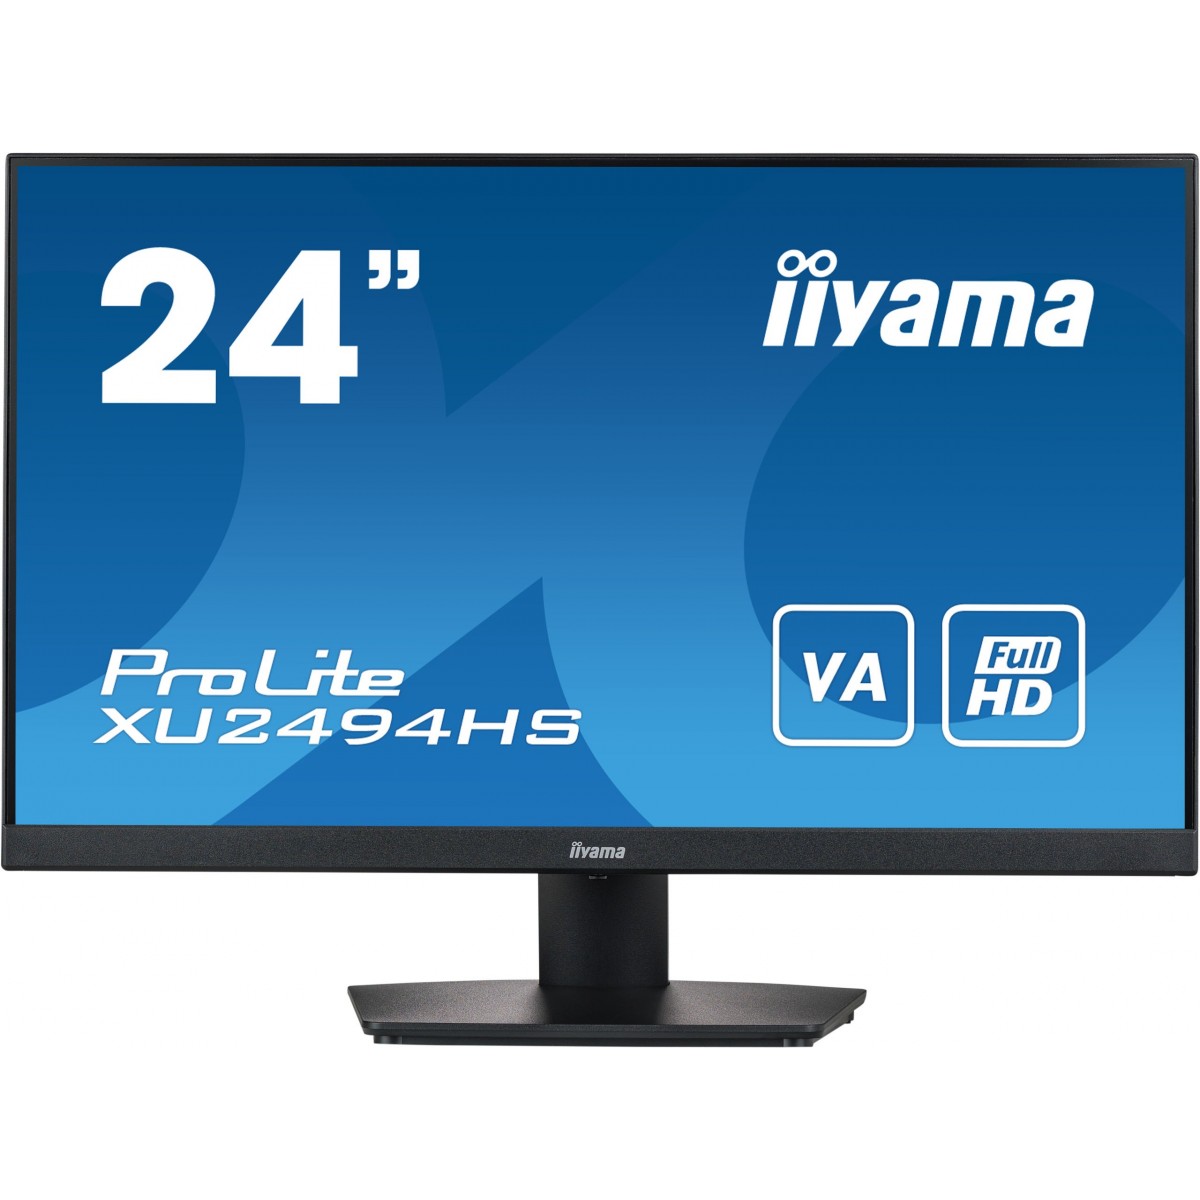 Iiyama 24i ETE VA-panel 1920x1080 4ms 250cd-m Speakers HDMI DisplayPort 23 8i - Flat Screen - 4 ms